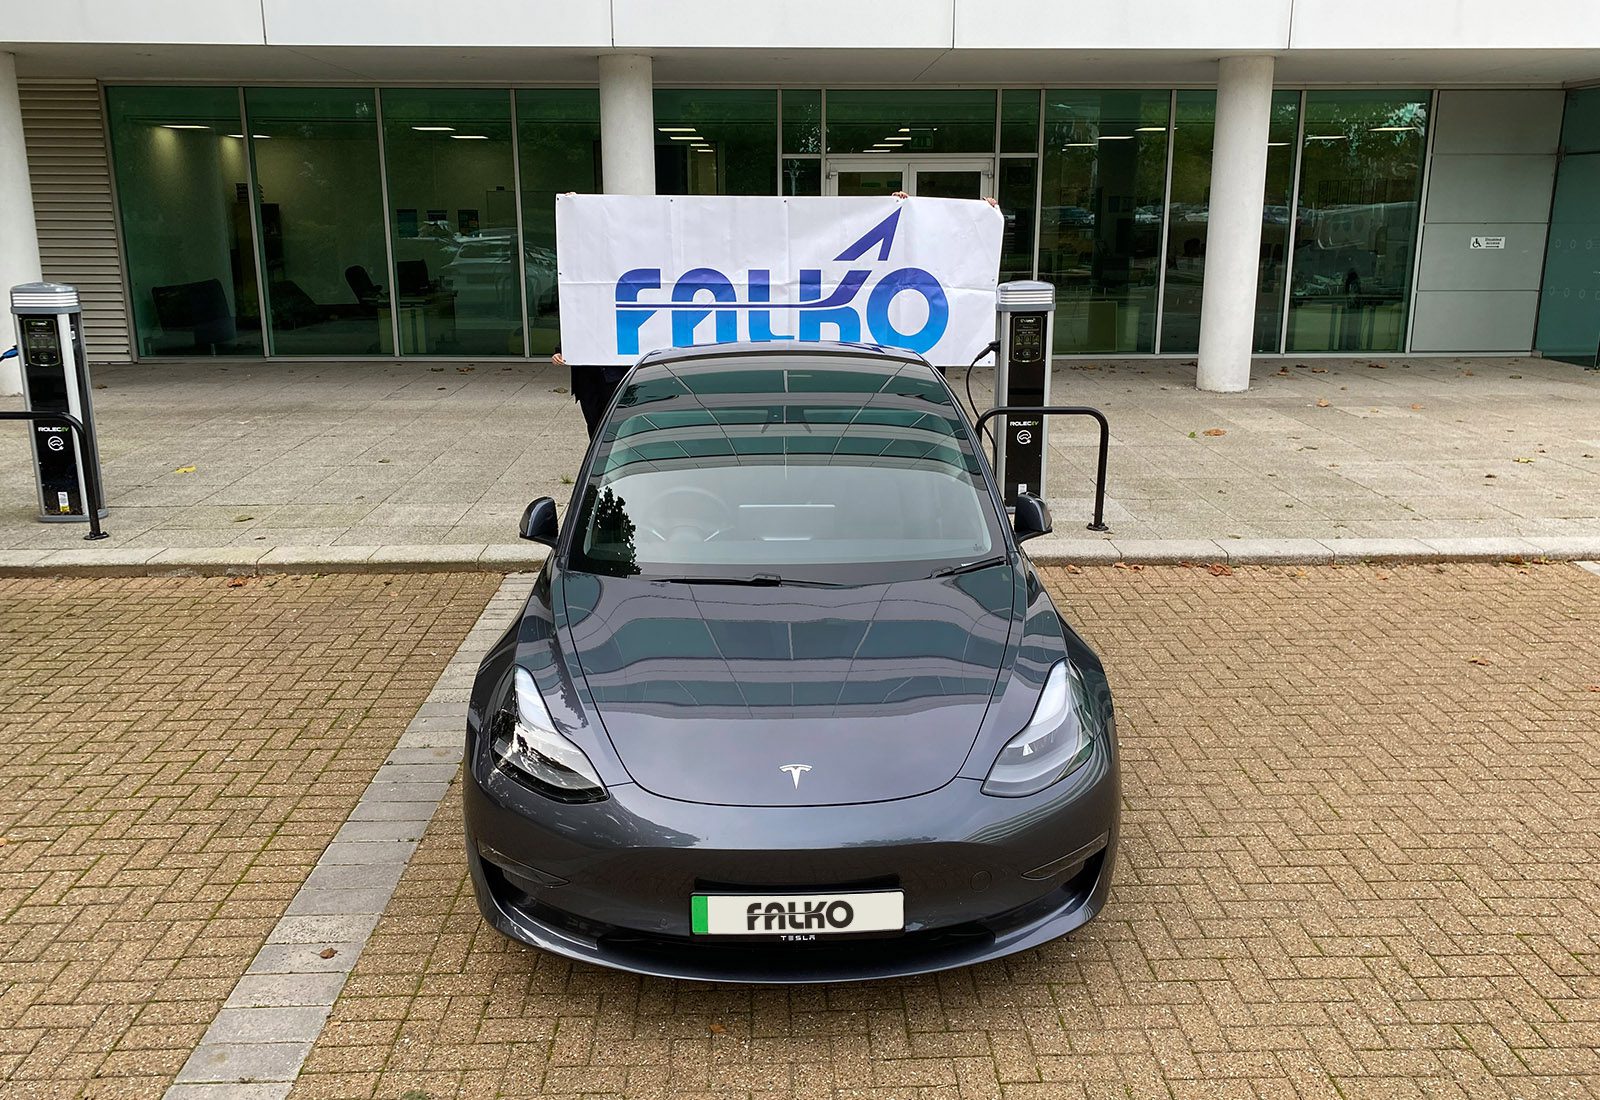 Falko Electric Vehicle Scheme